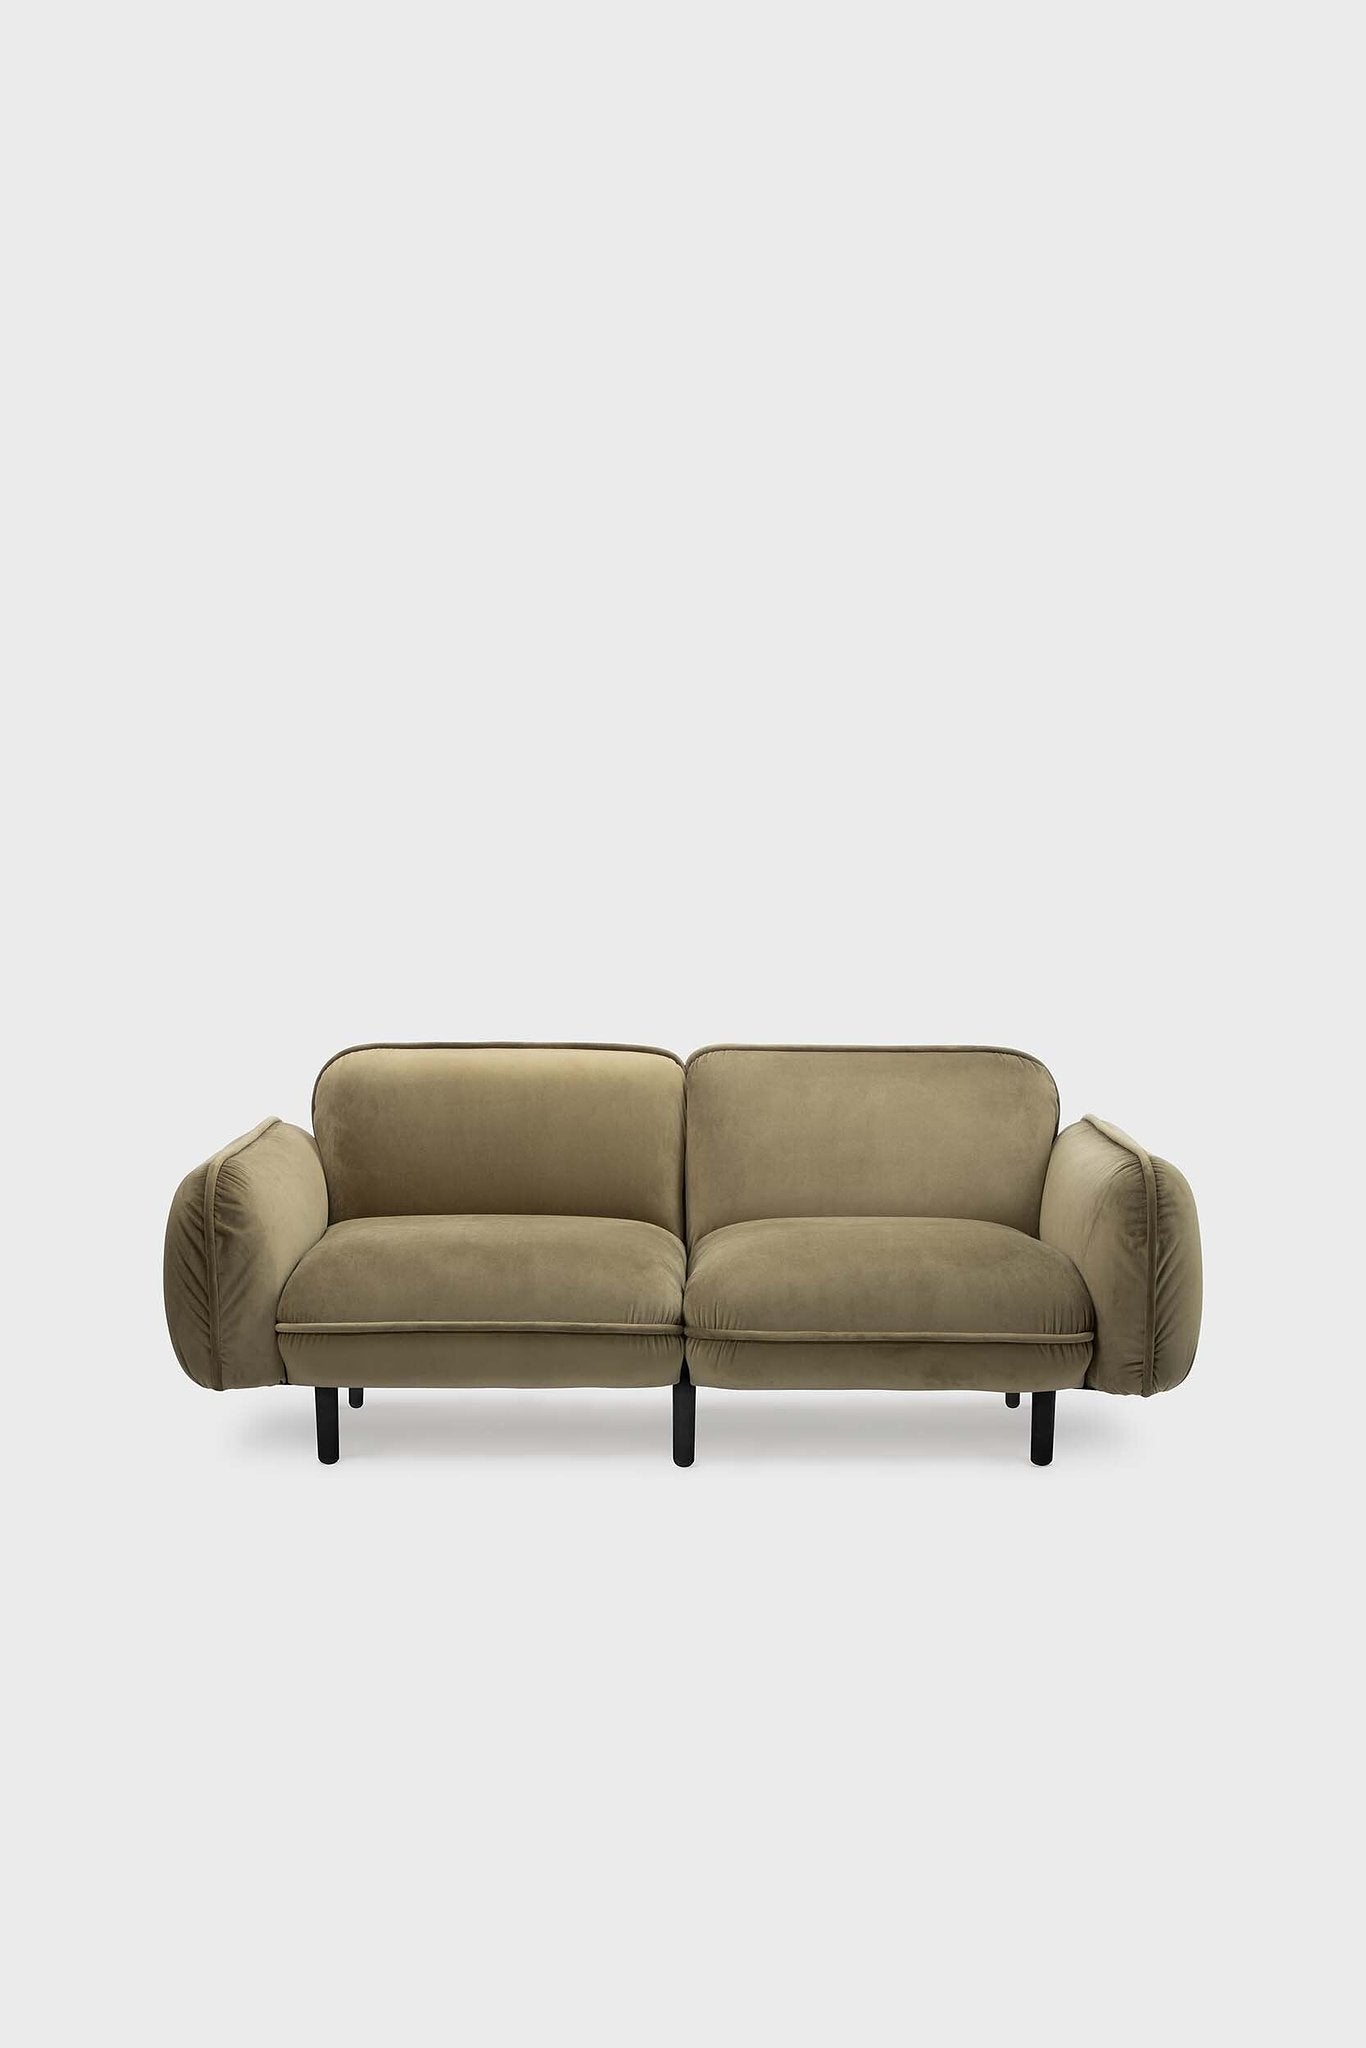 EMKO Bean Sofa 2-Seater / Mustard / Boucle fabric